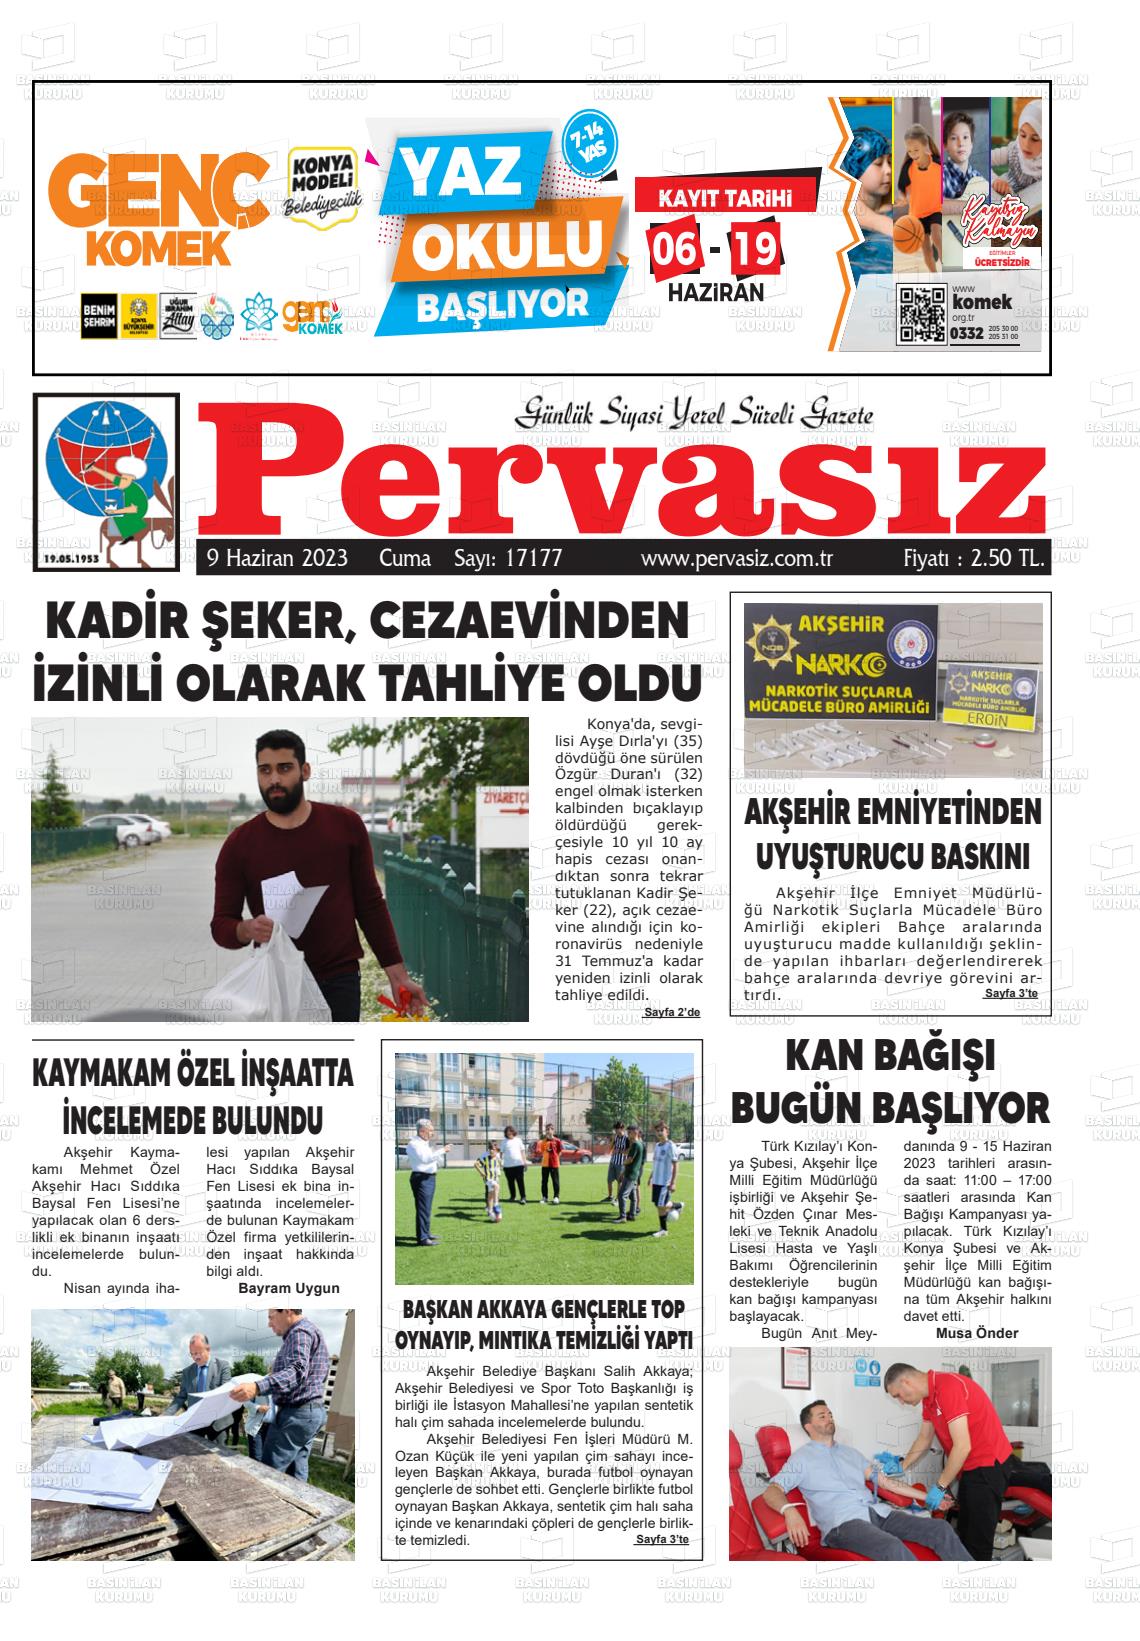 09 Haziran 2023 Konya Pervasız Gazete Manşeti